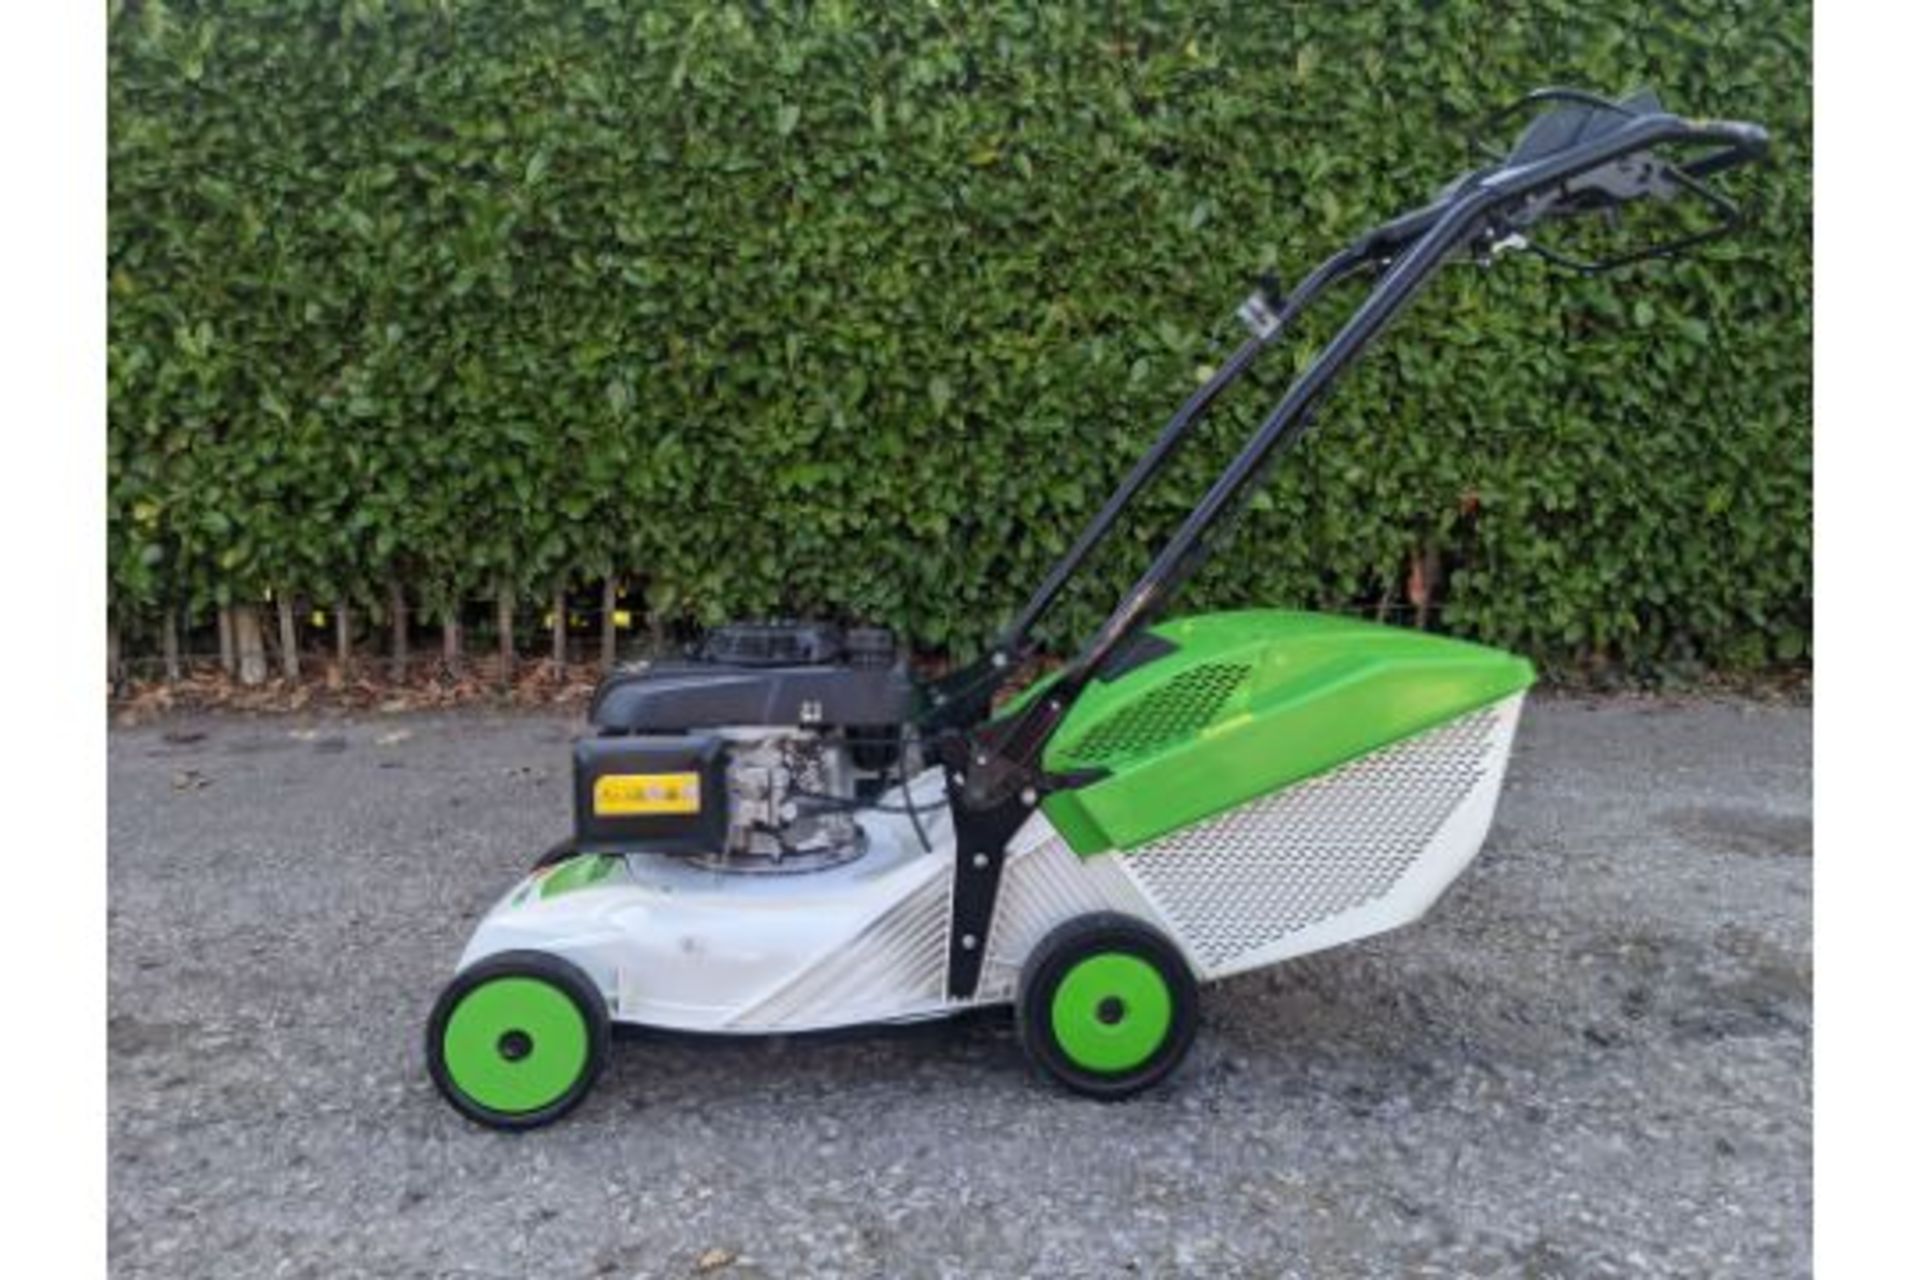 2019 Etesia Pro 46 PHCT 18" Self Propelled Lawn Mower